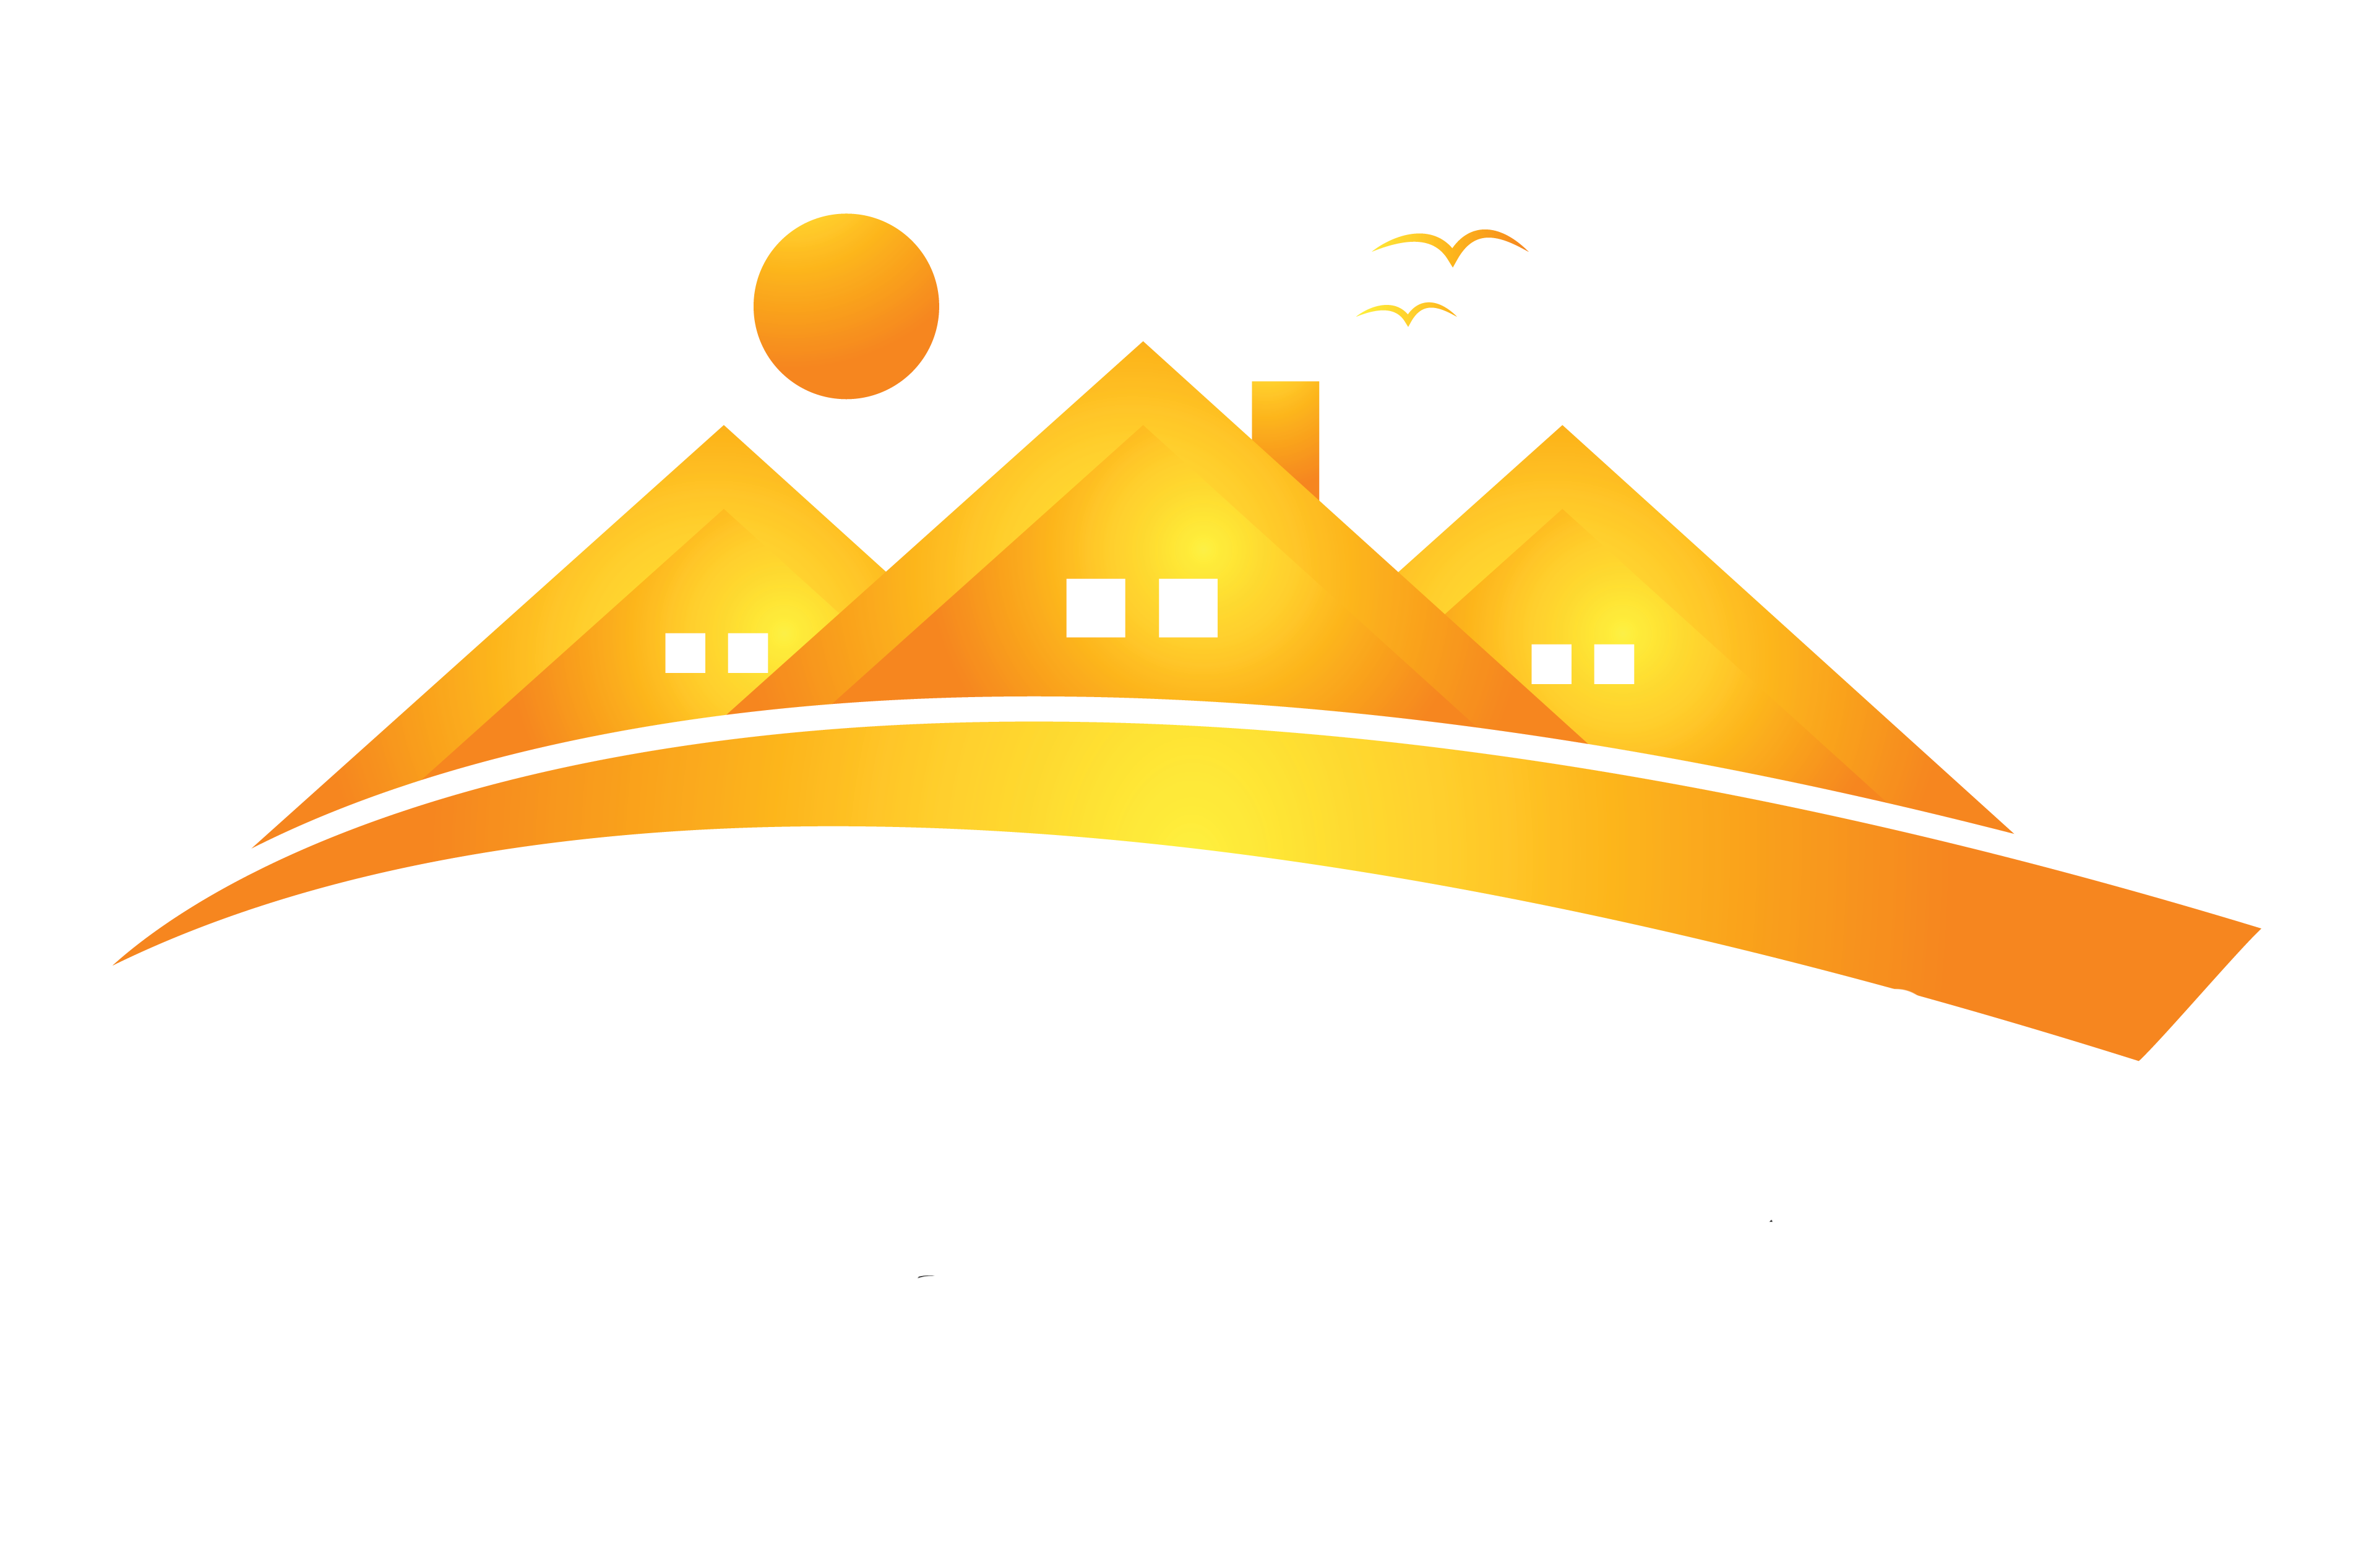 Yaakwah Lodge